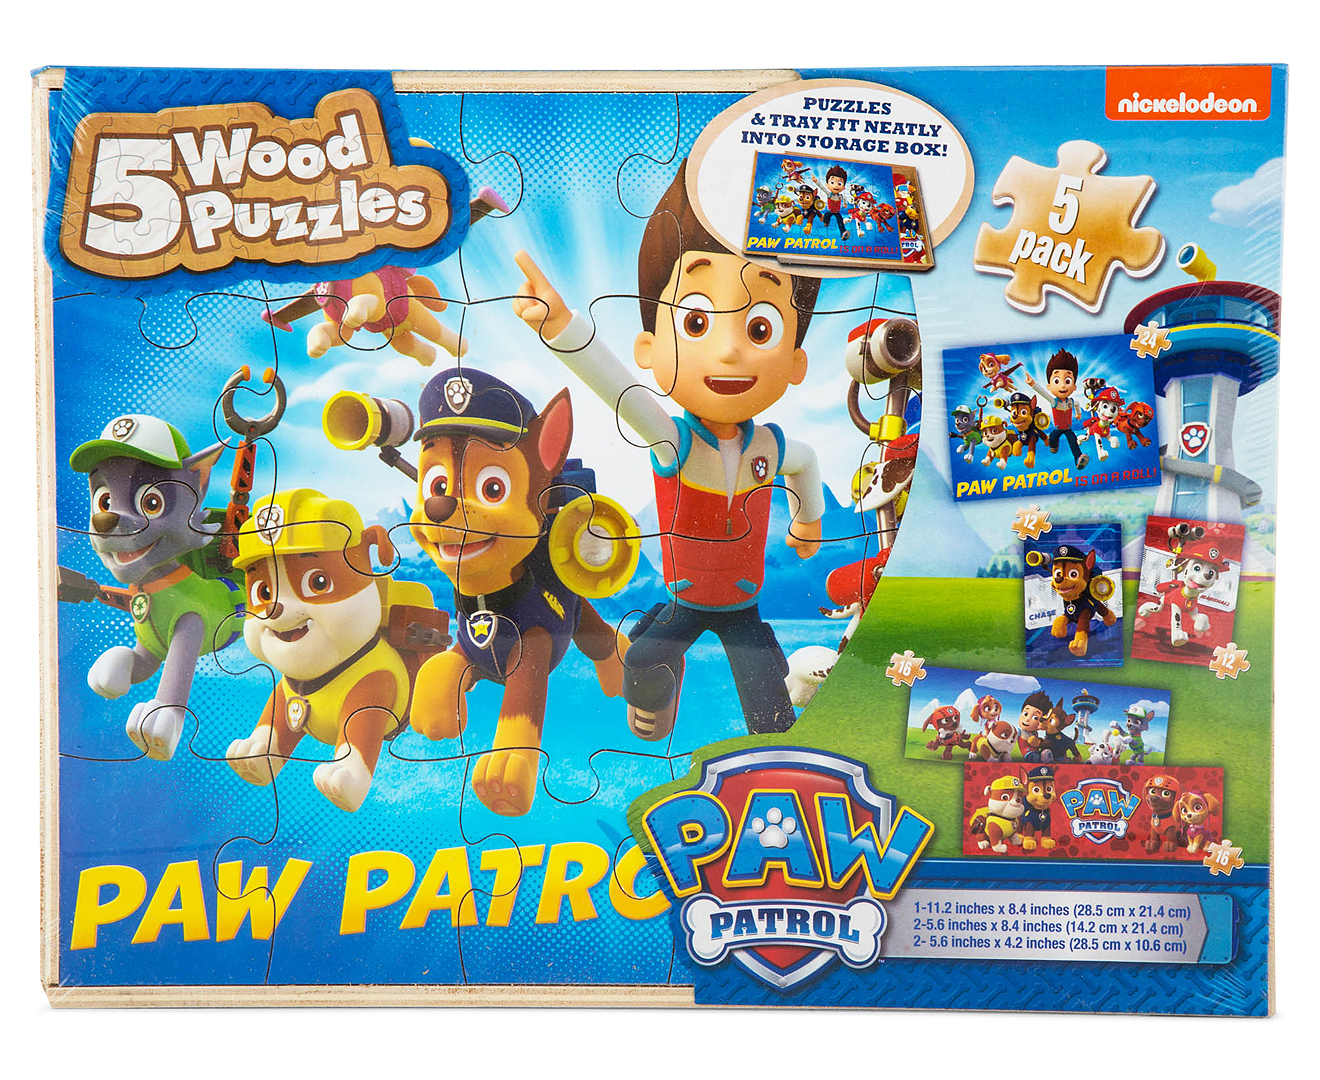 Paw Patrol 5 Wood Puzzle Box | Catch.com.au